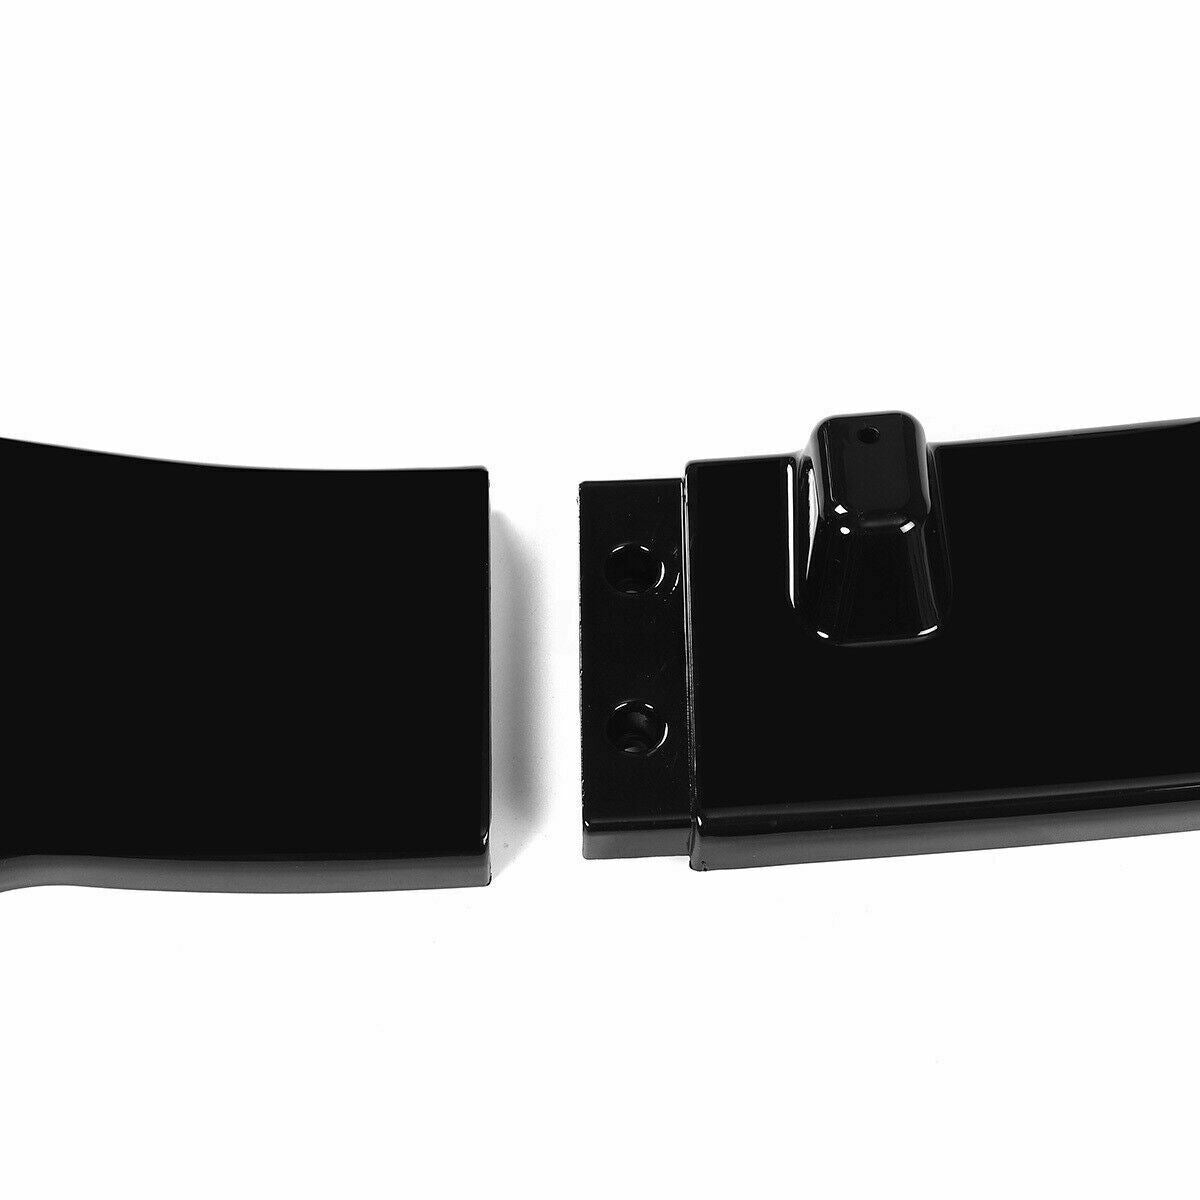 Ajuste 2017-2020 Tesla modelo 3 parachoques delantero labio divisor barbilla (negro brillante)